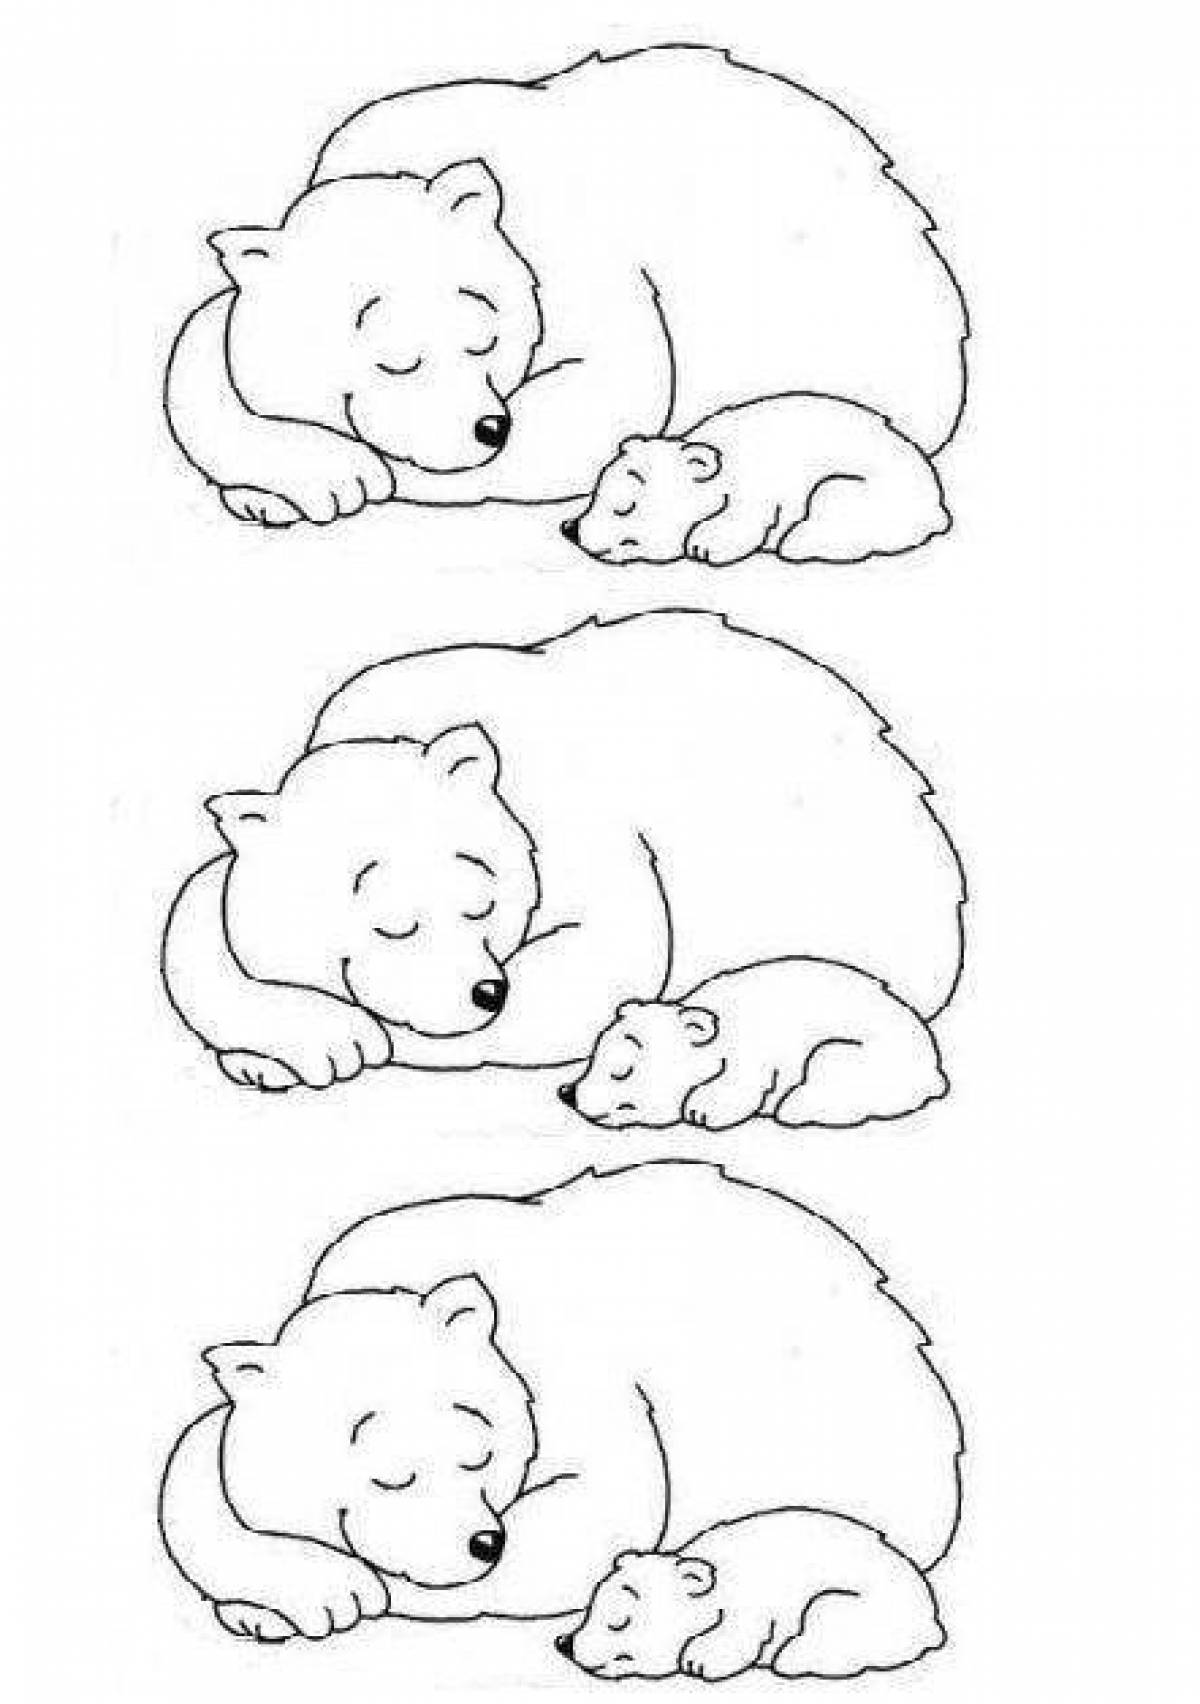 Snuggly coloring page спящий медведь